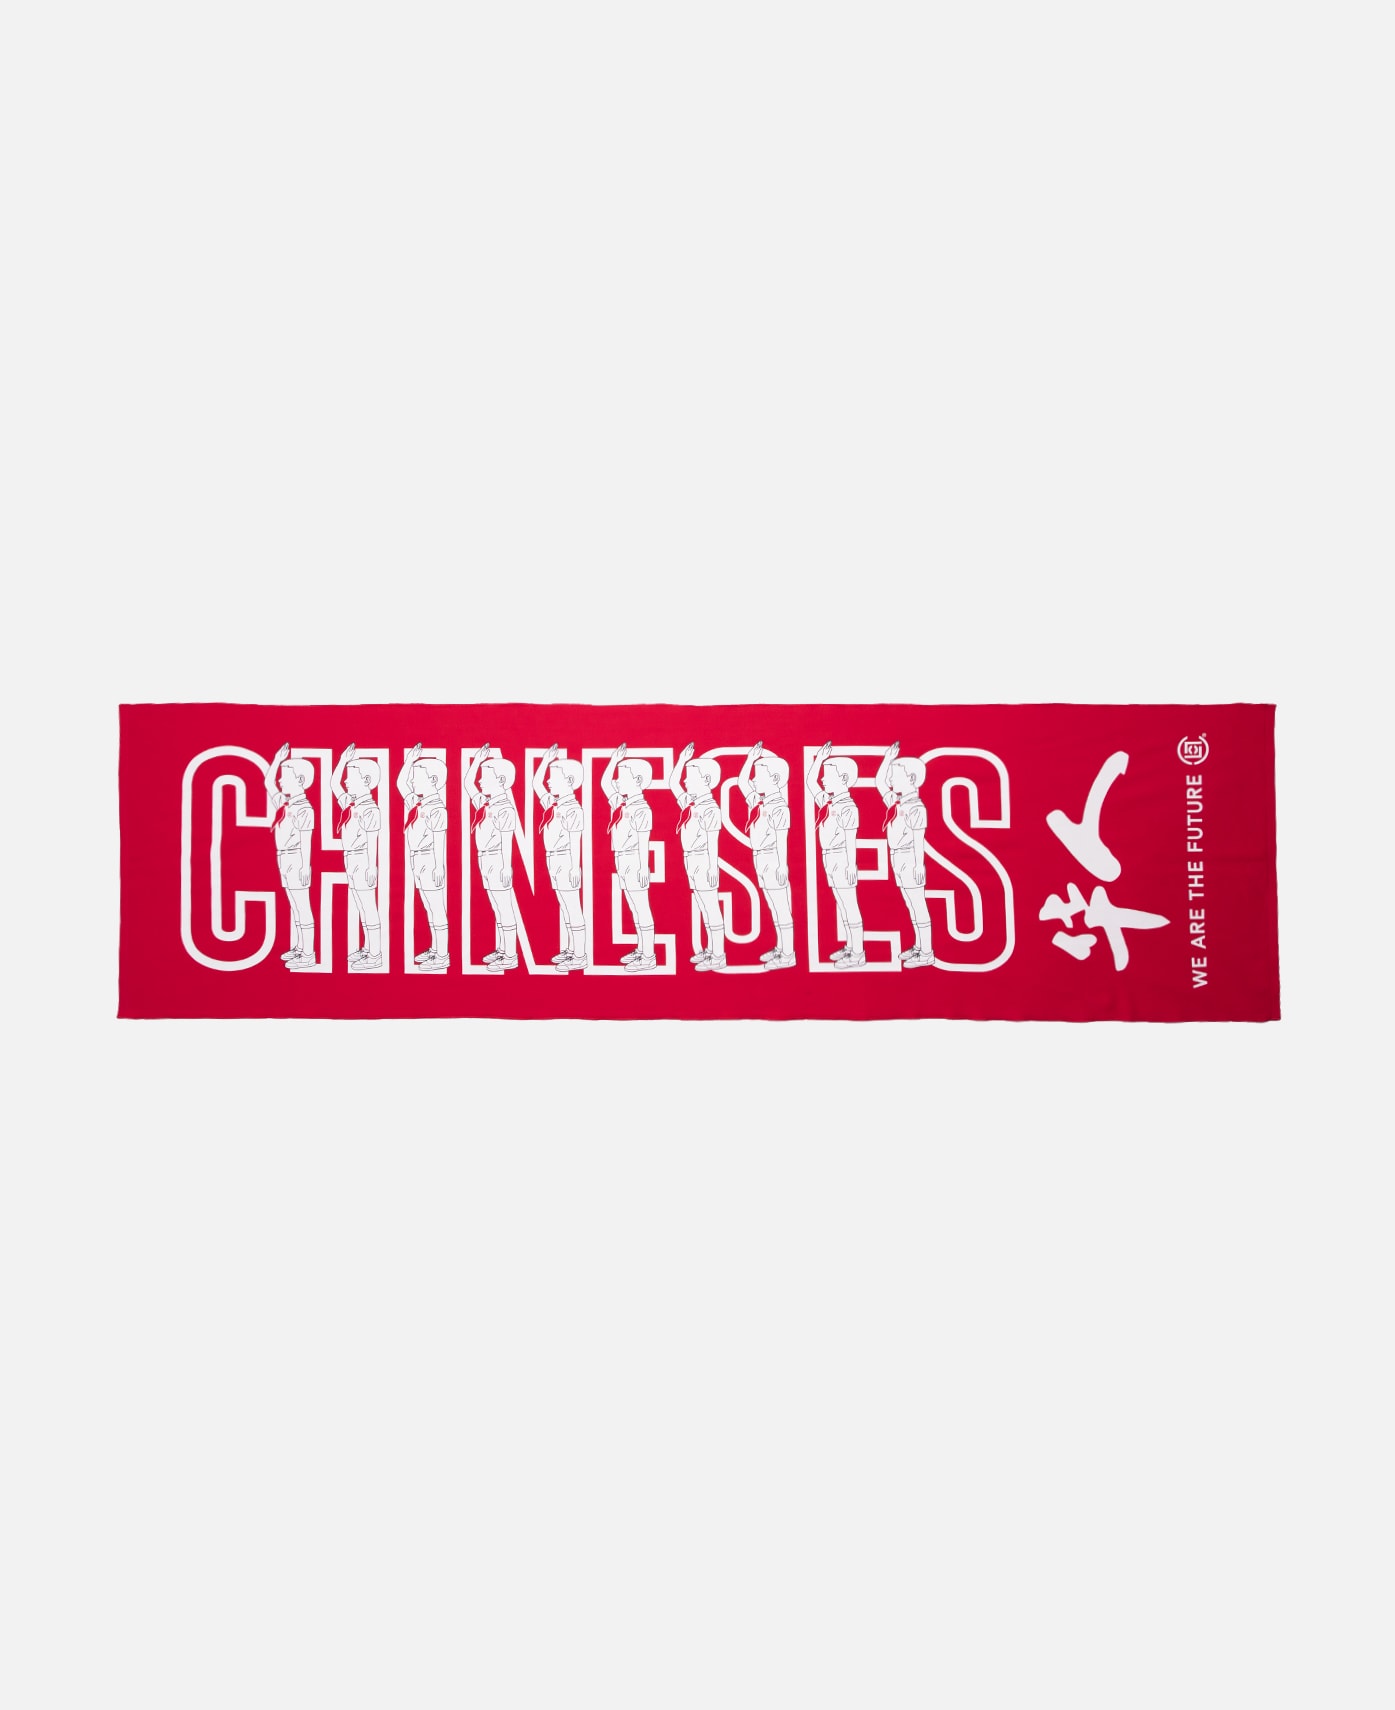 CLOT 將於上海開設「CHINESES Capsule」別注系列 Pop-Up Store